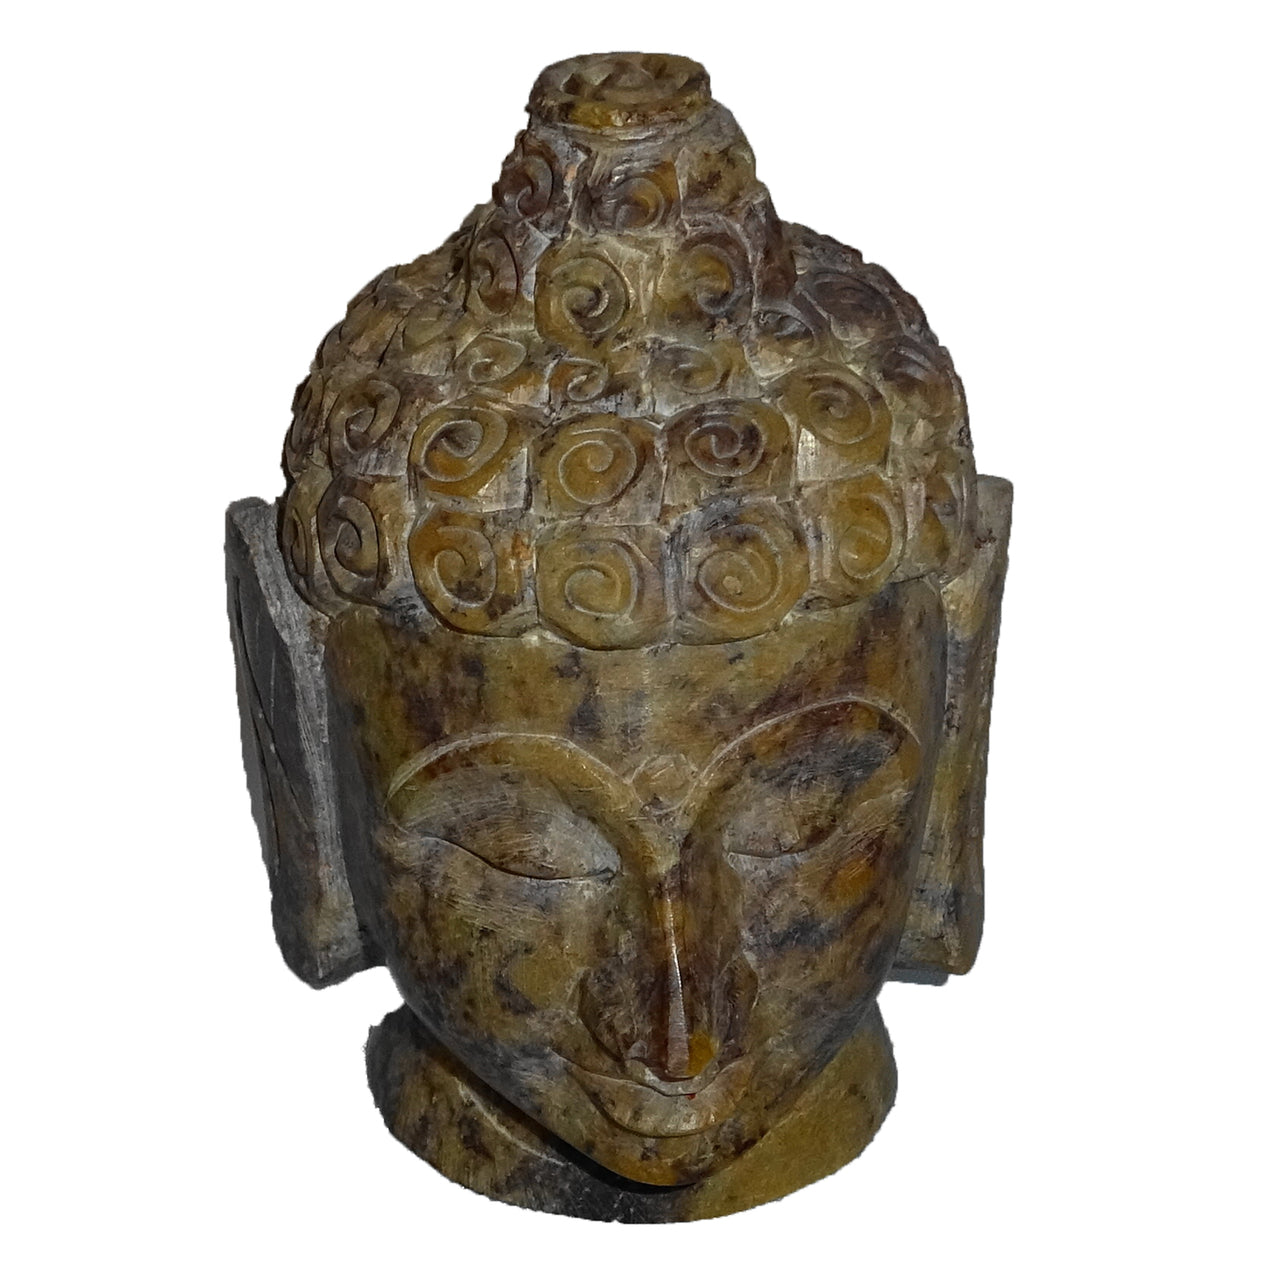 Fire Sale! Small Buddha Head Hand Carved Gorara Stone Sculpture